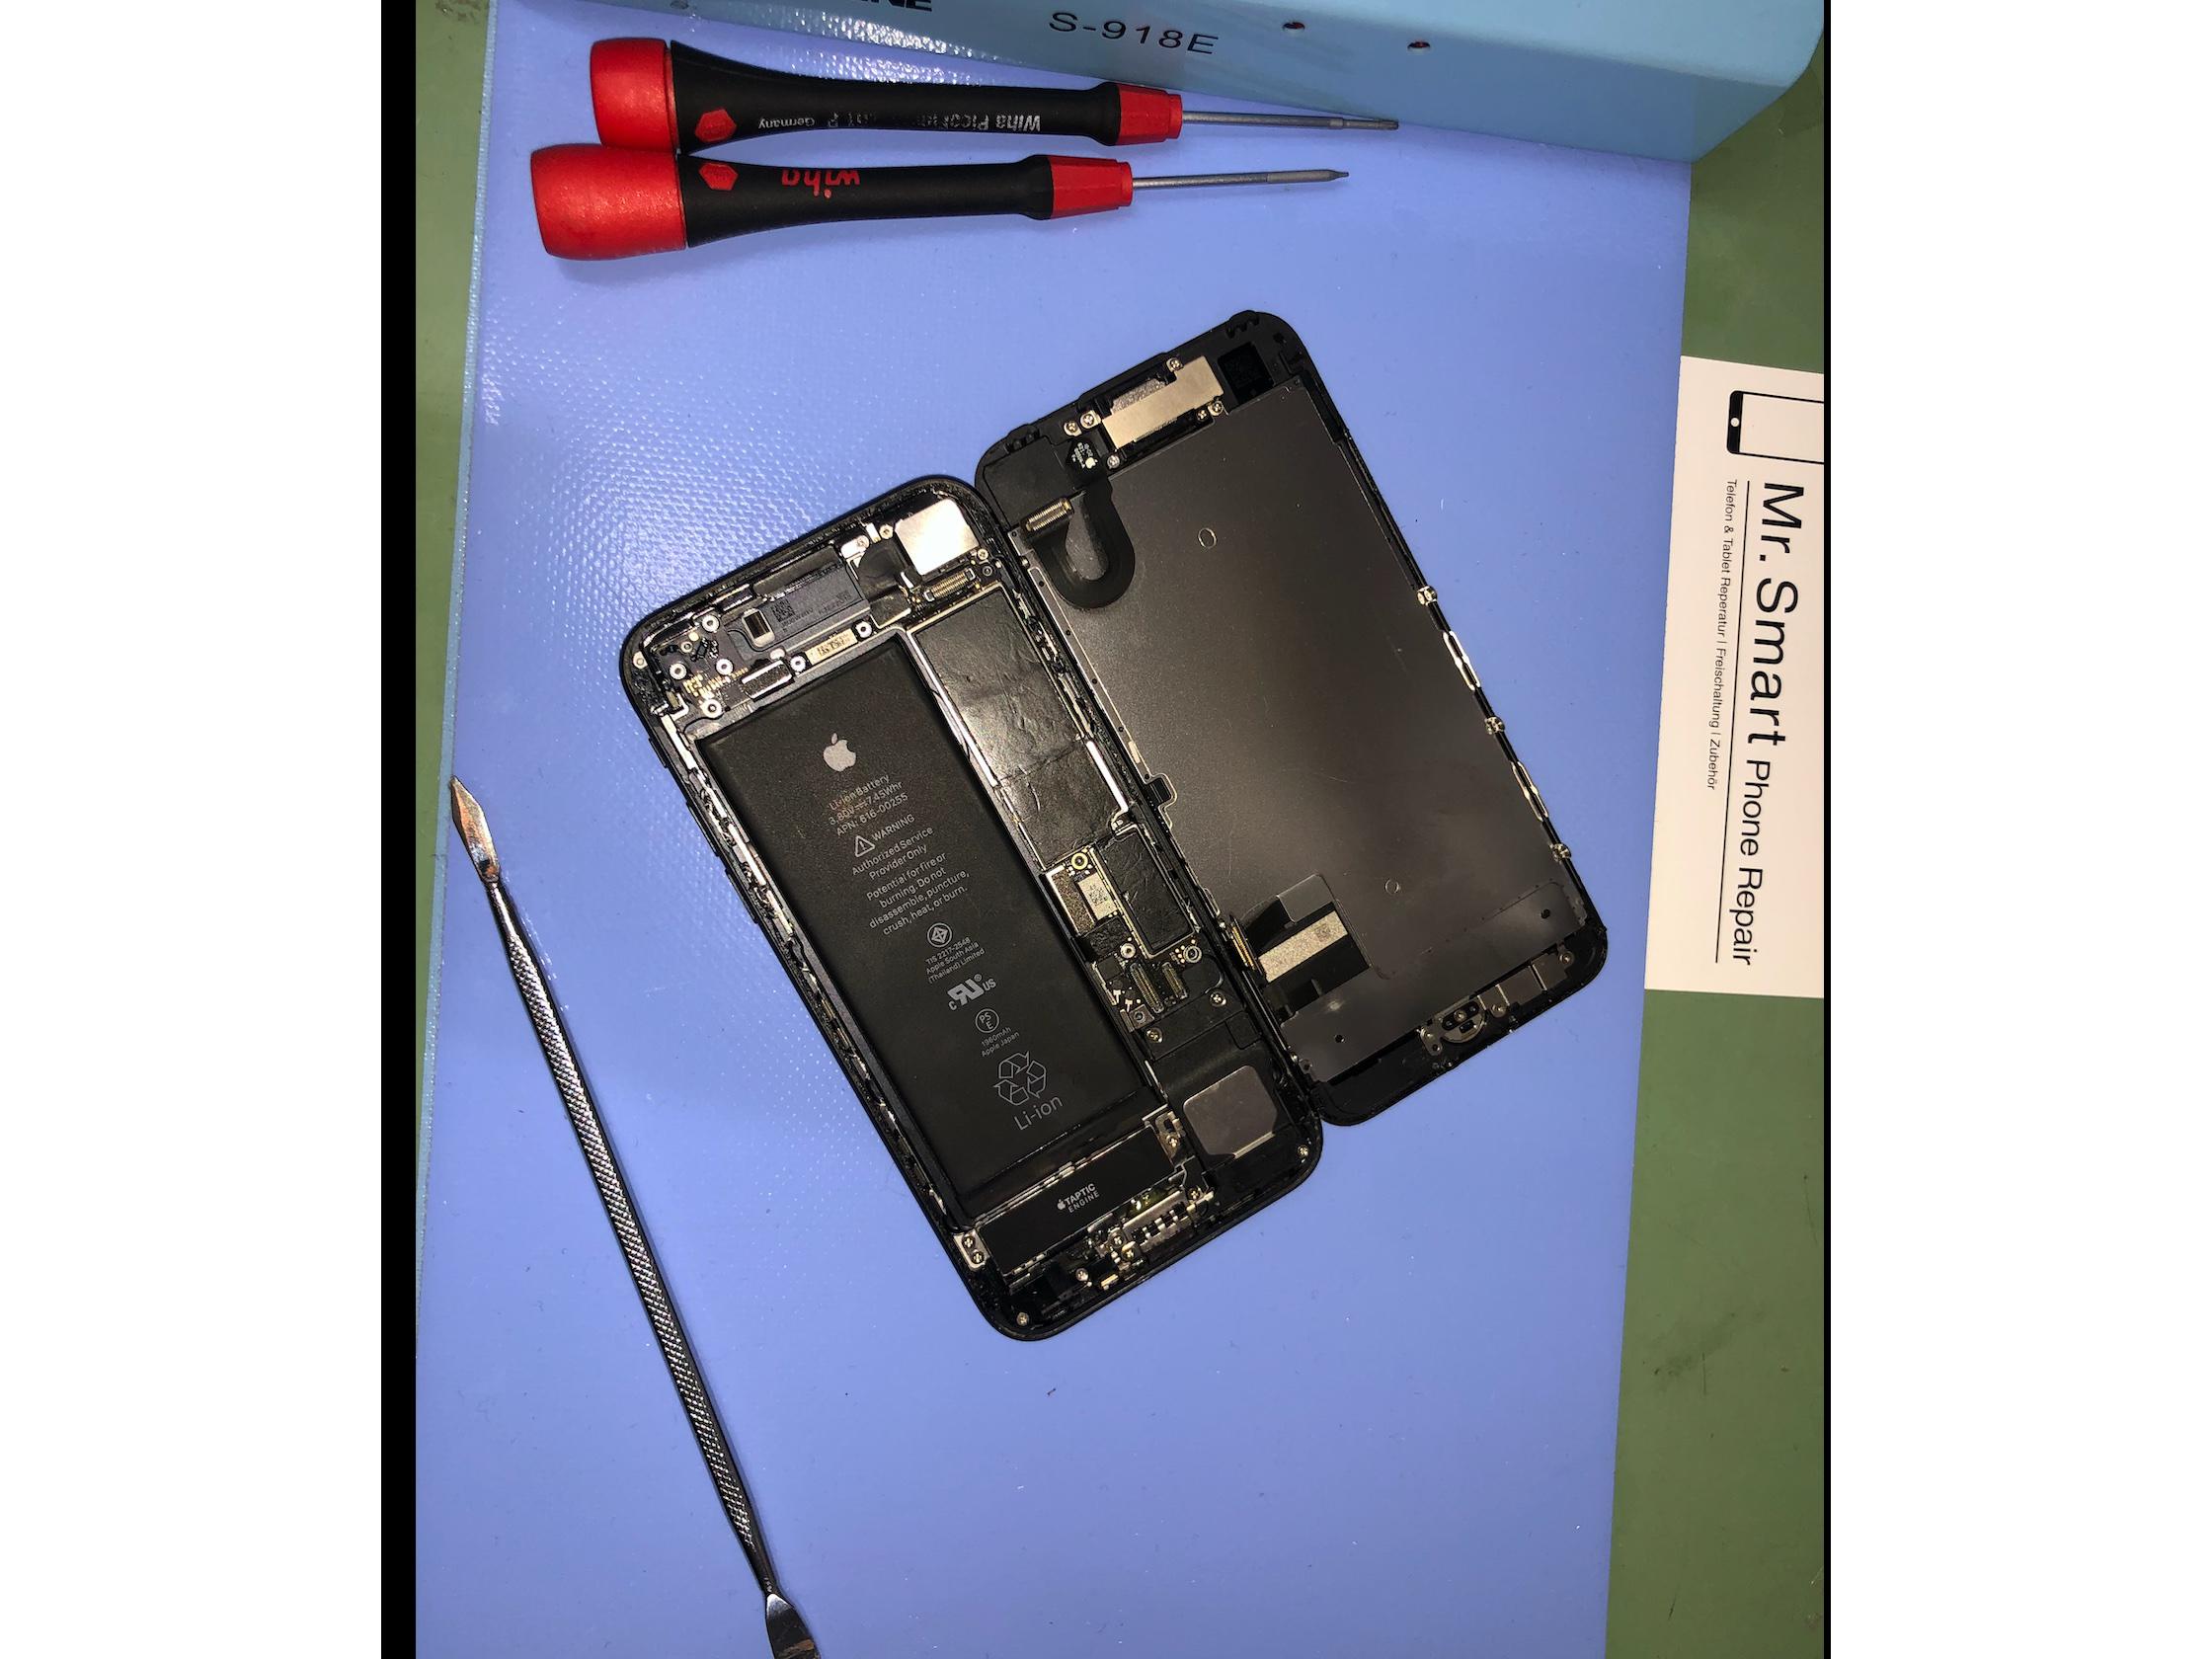 Bilder Mr. Smart Phone Repair, Handyreparatur